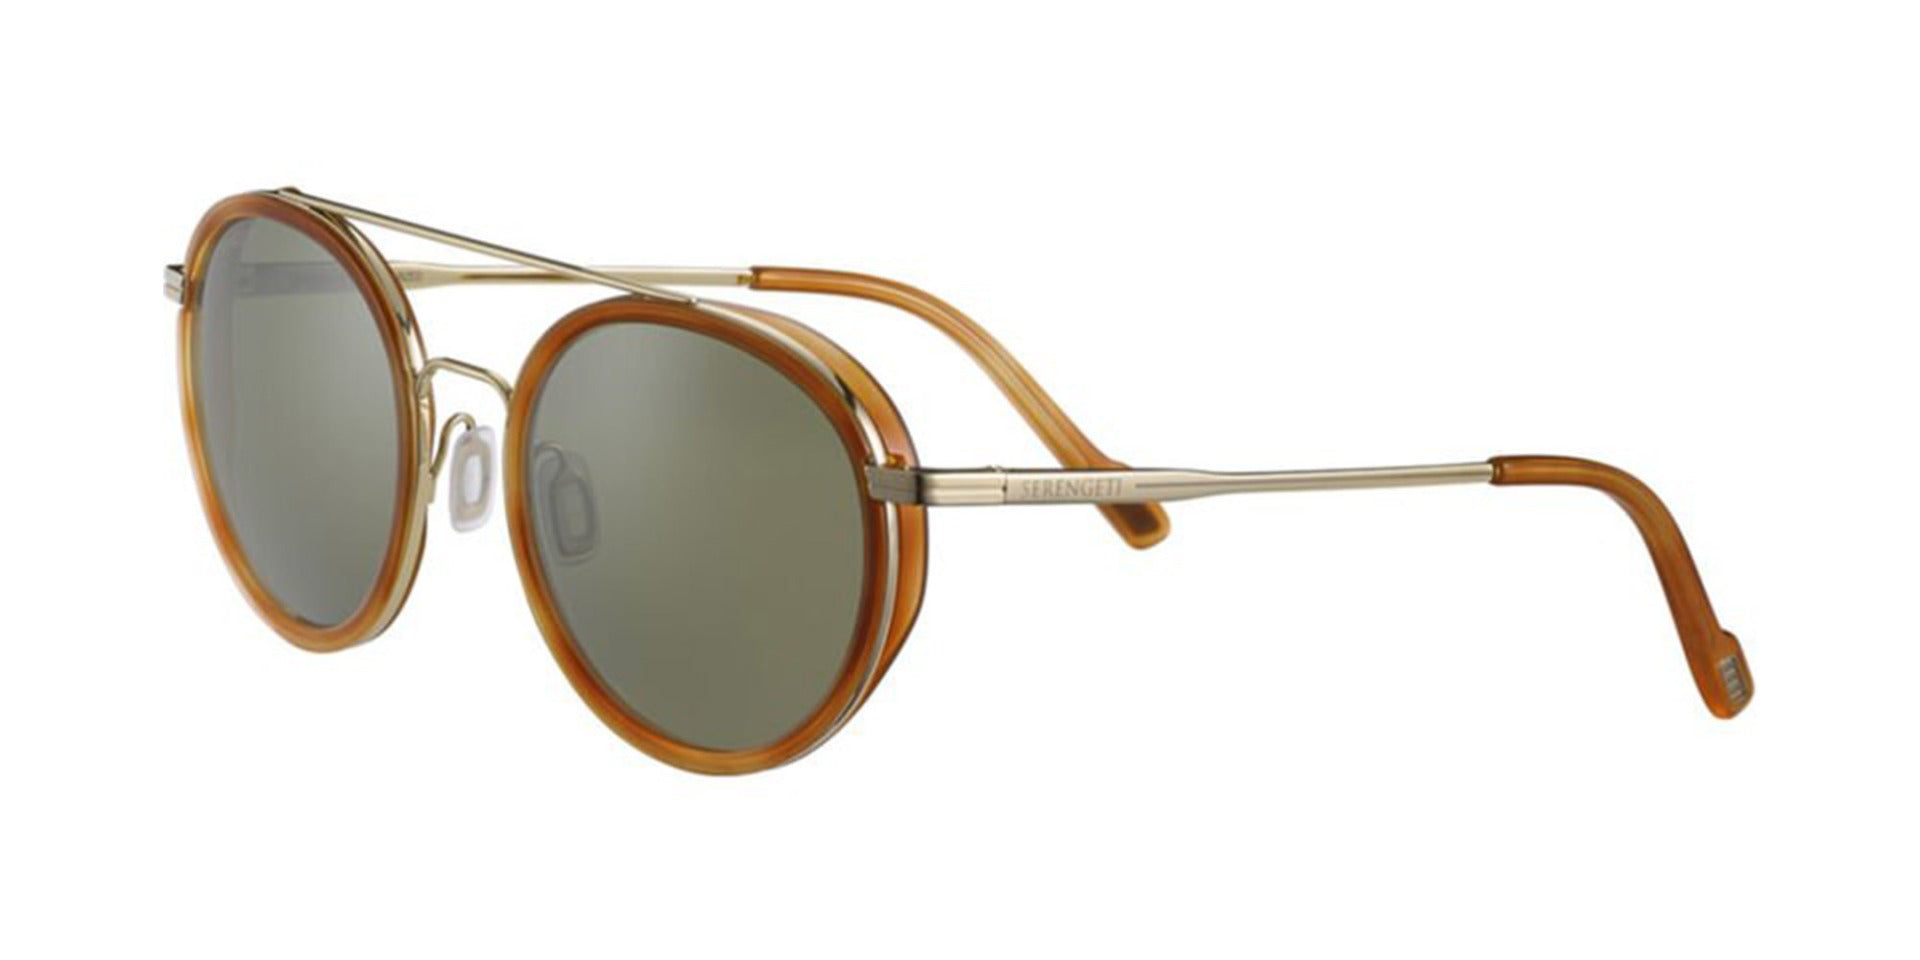 Clearance Sale Premium Promo Acetate Polarized Sun Glasses Sunglasses Women  - China Men's Sunglasses and Sun Glasses price